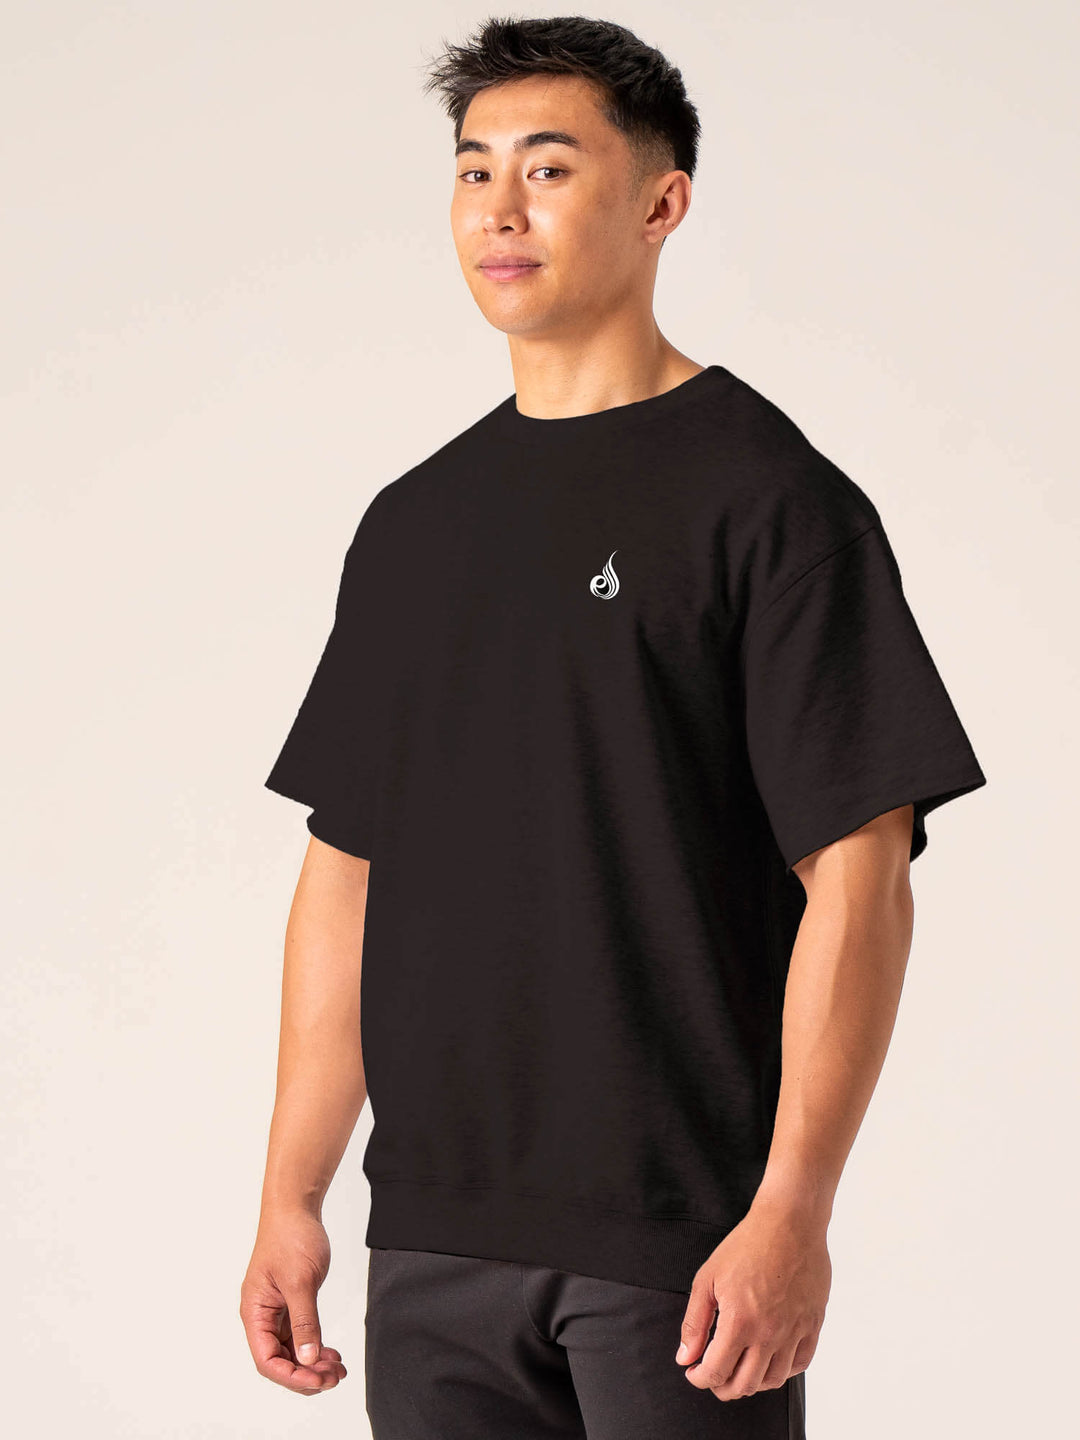 Emerge Fleece T-Shirt - Faded Black Clothing Ryderwear 